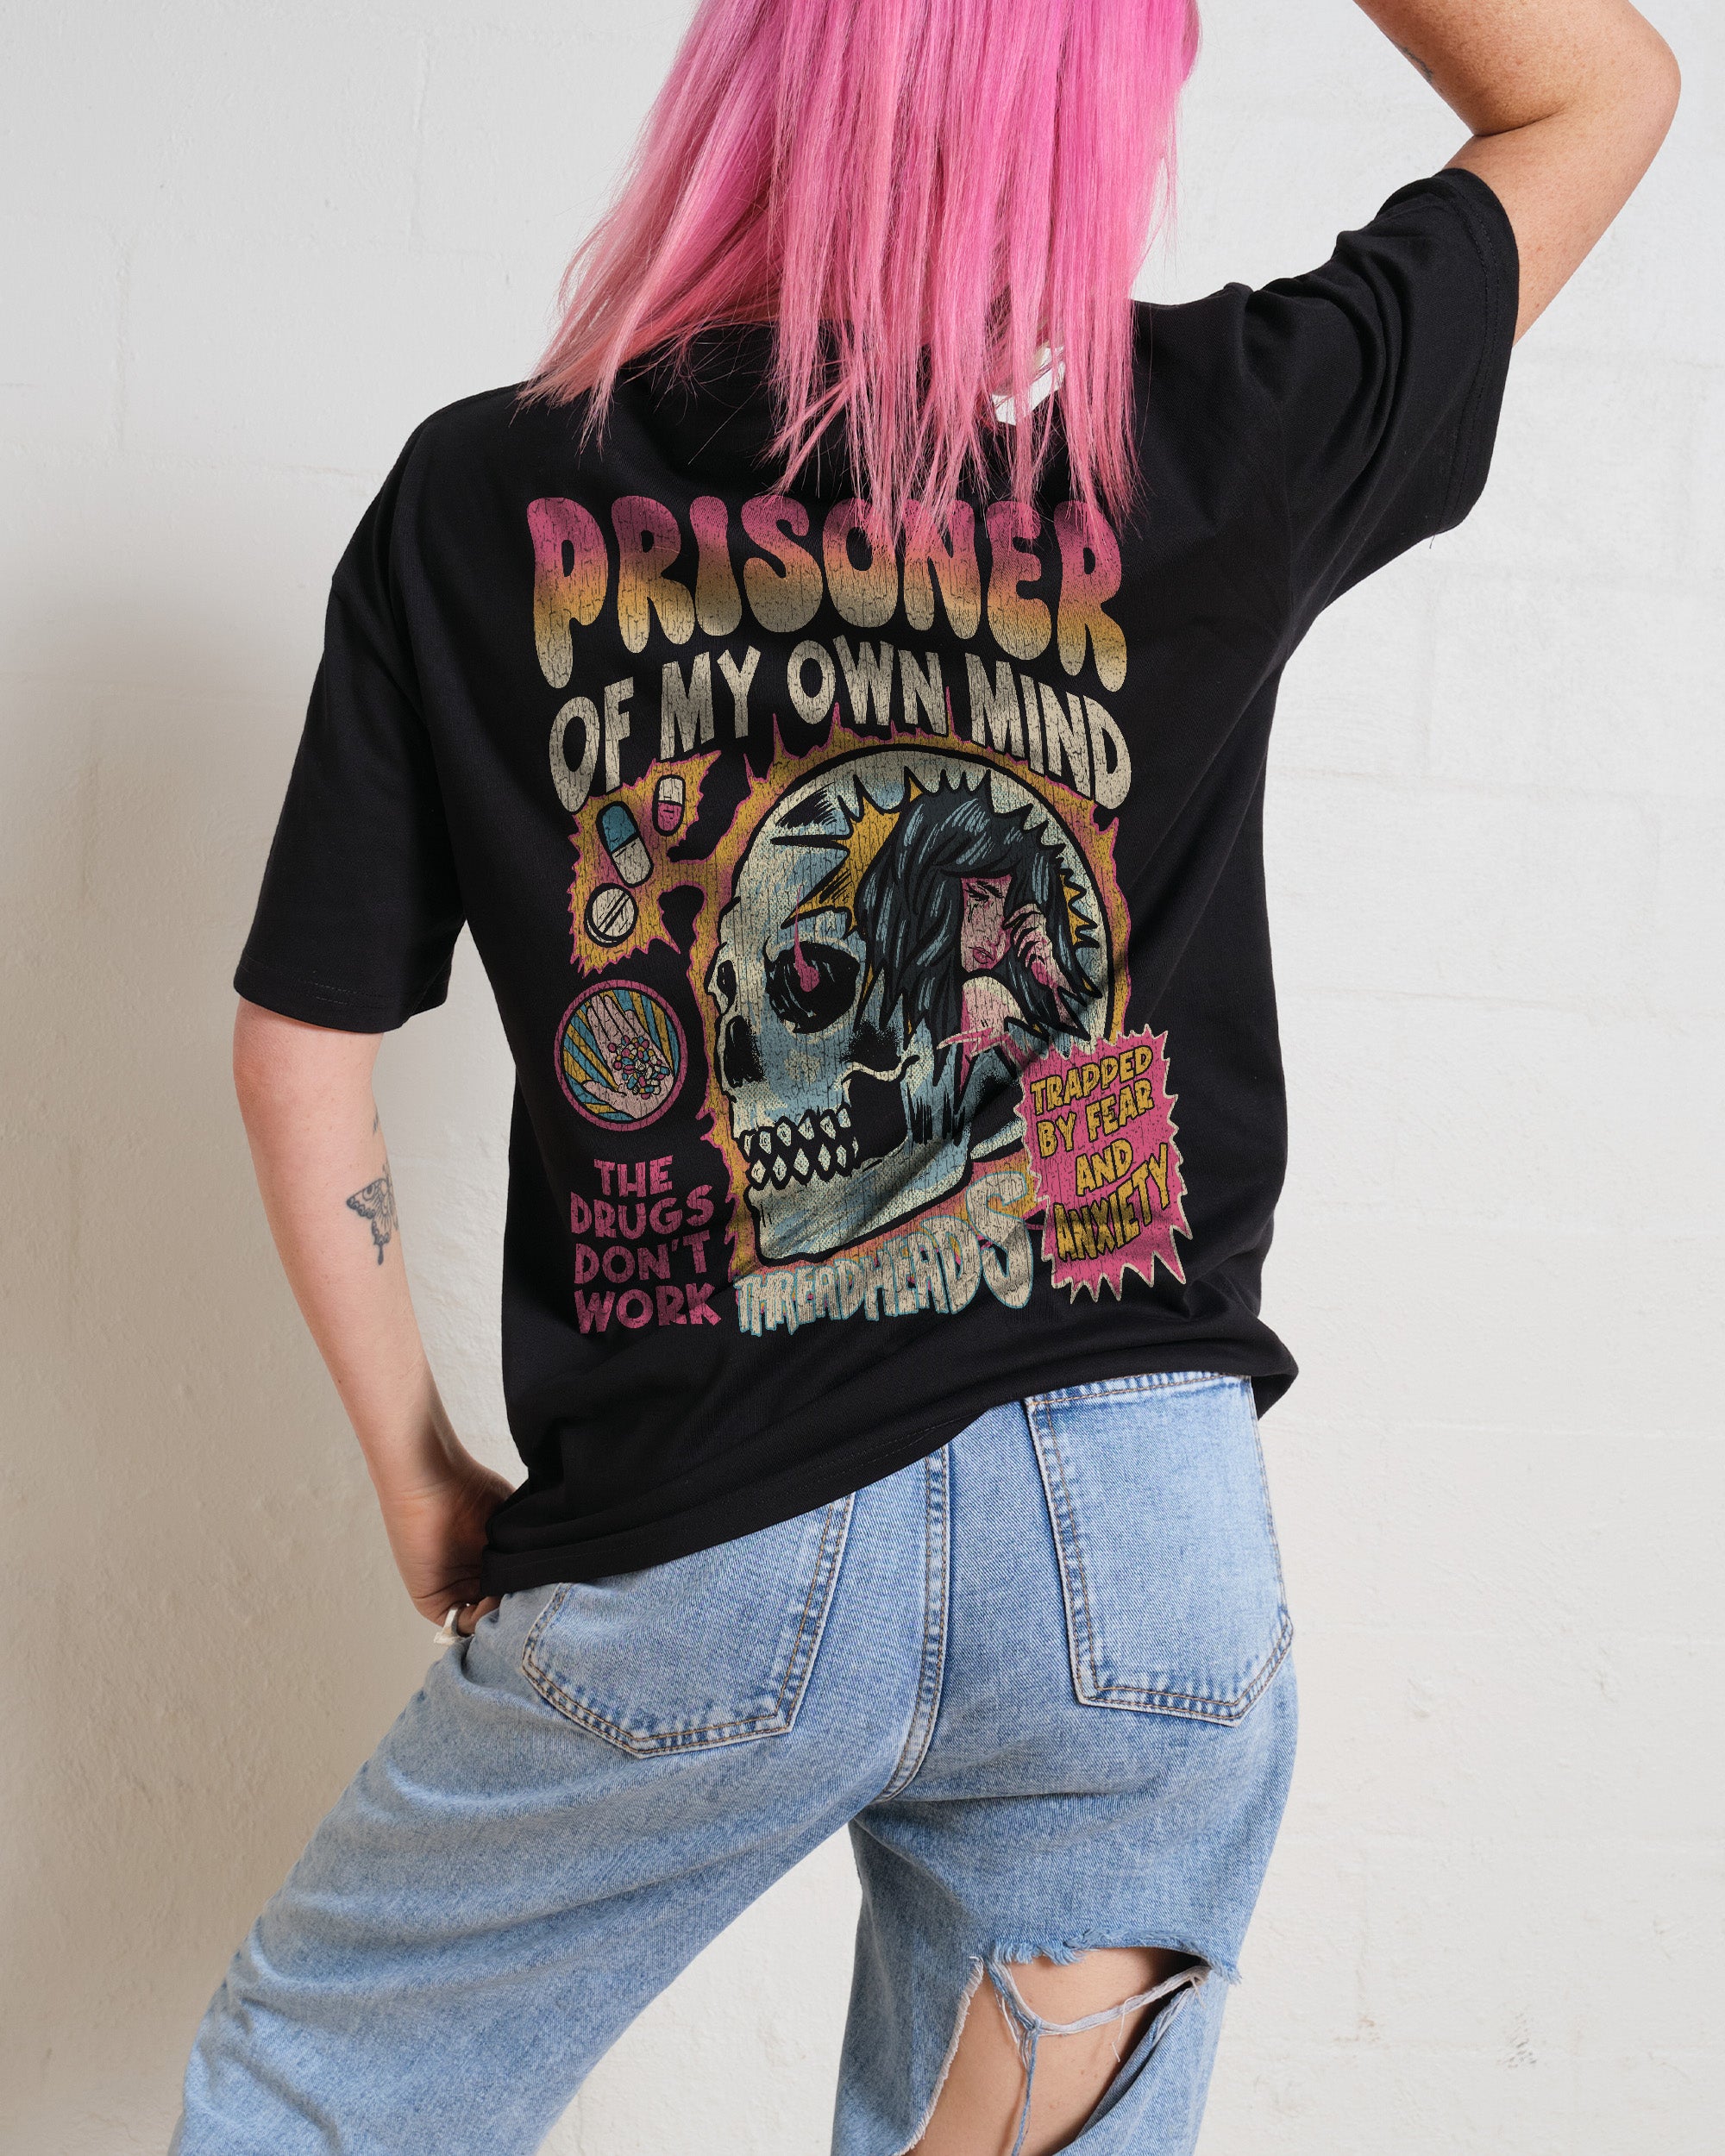 Prisoner Of My Own Mind T-Shirt